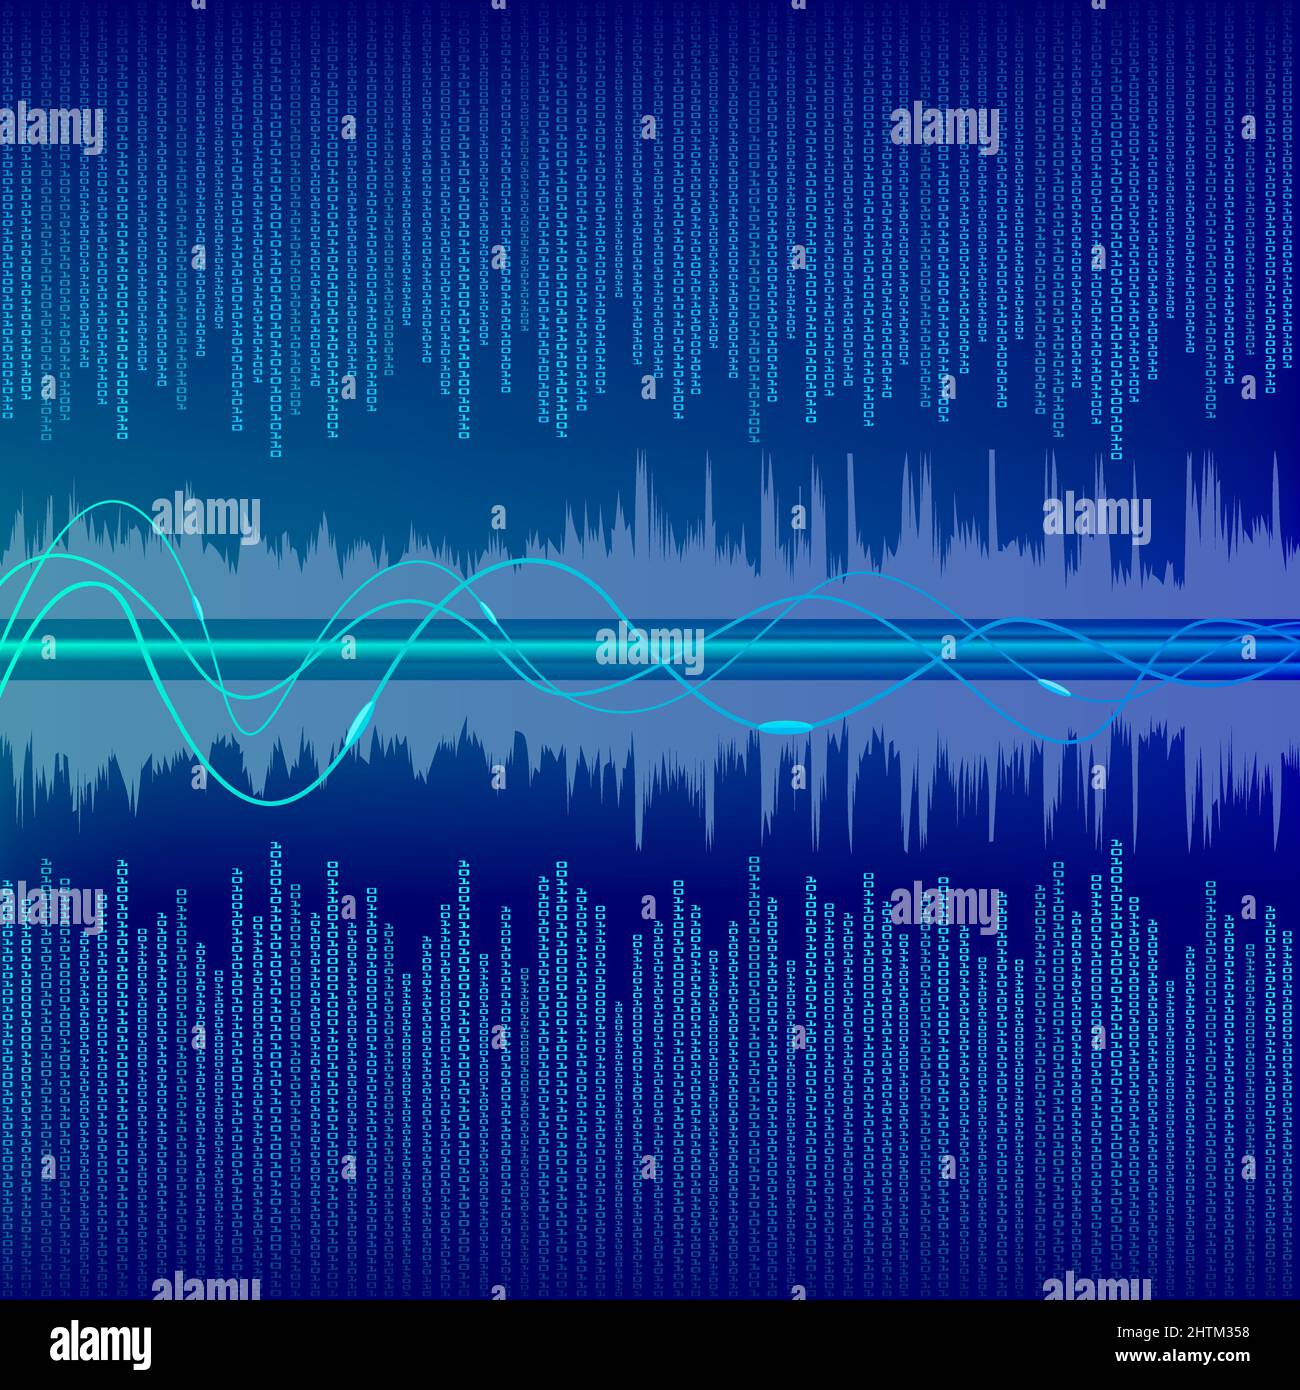 Binäre Welle Sound Vektor Illustration Hintergrund. Stock Vektor